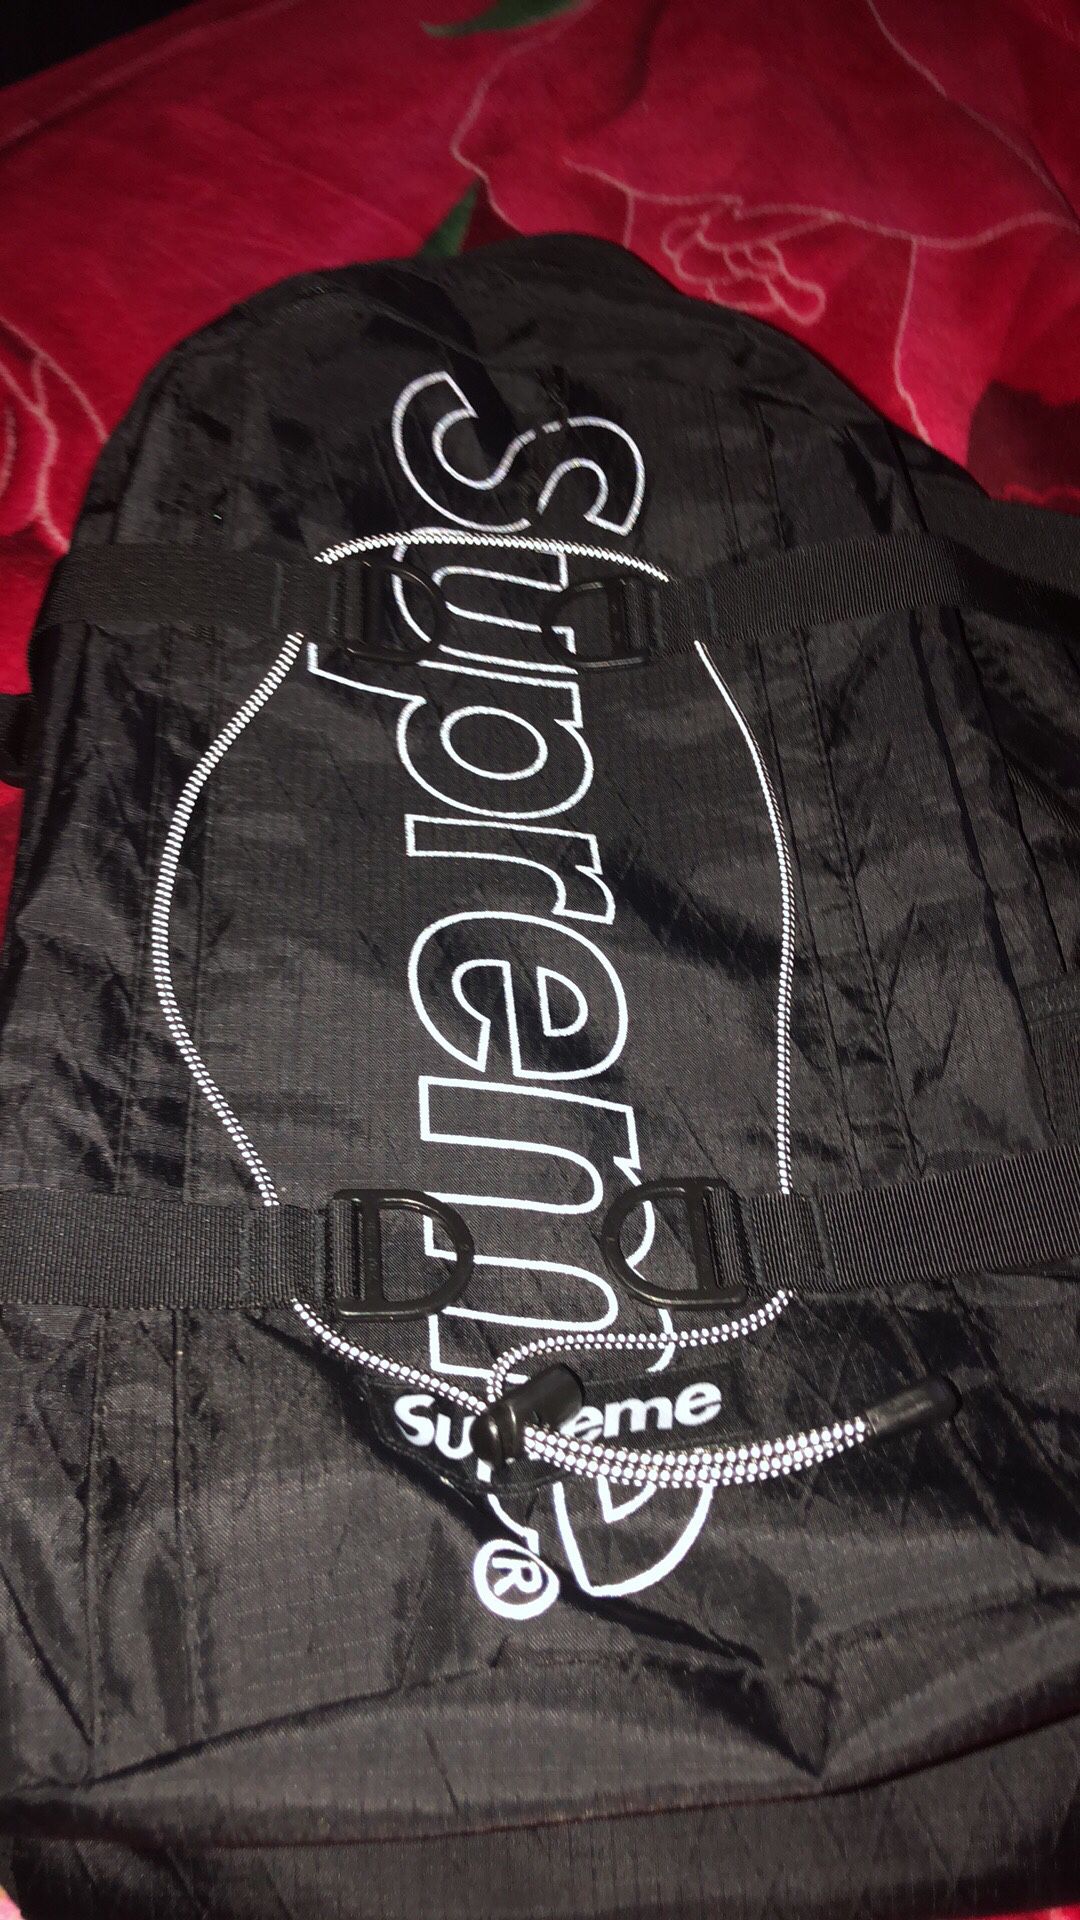 Supreme fw18 backpack